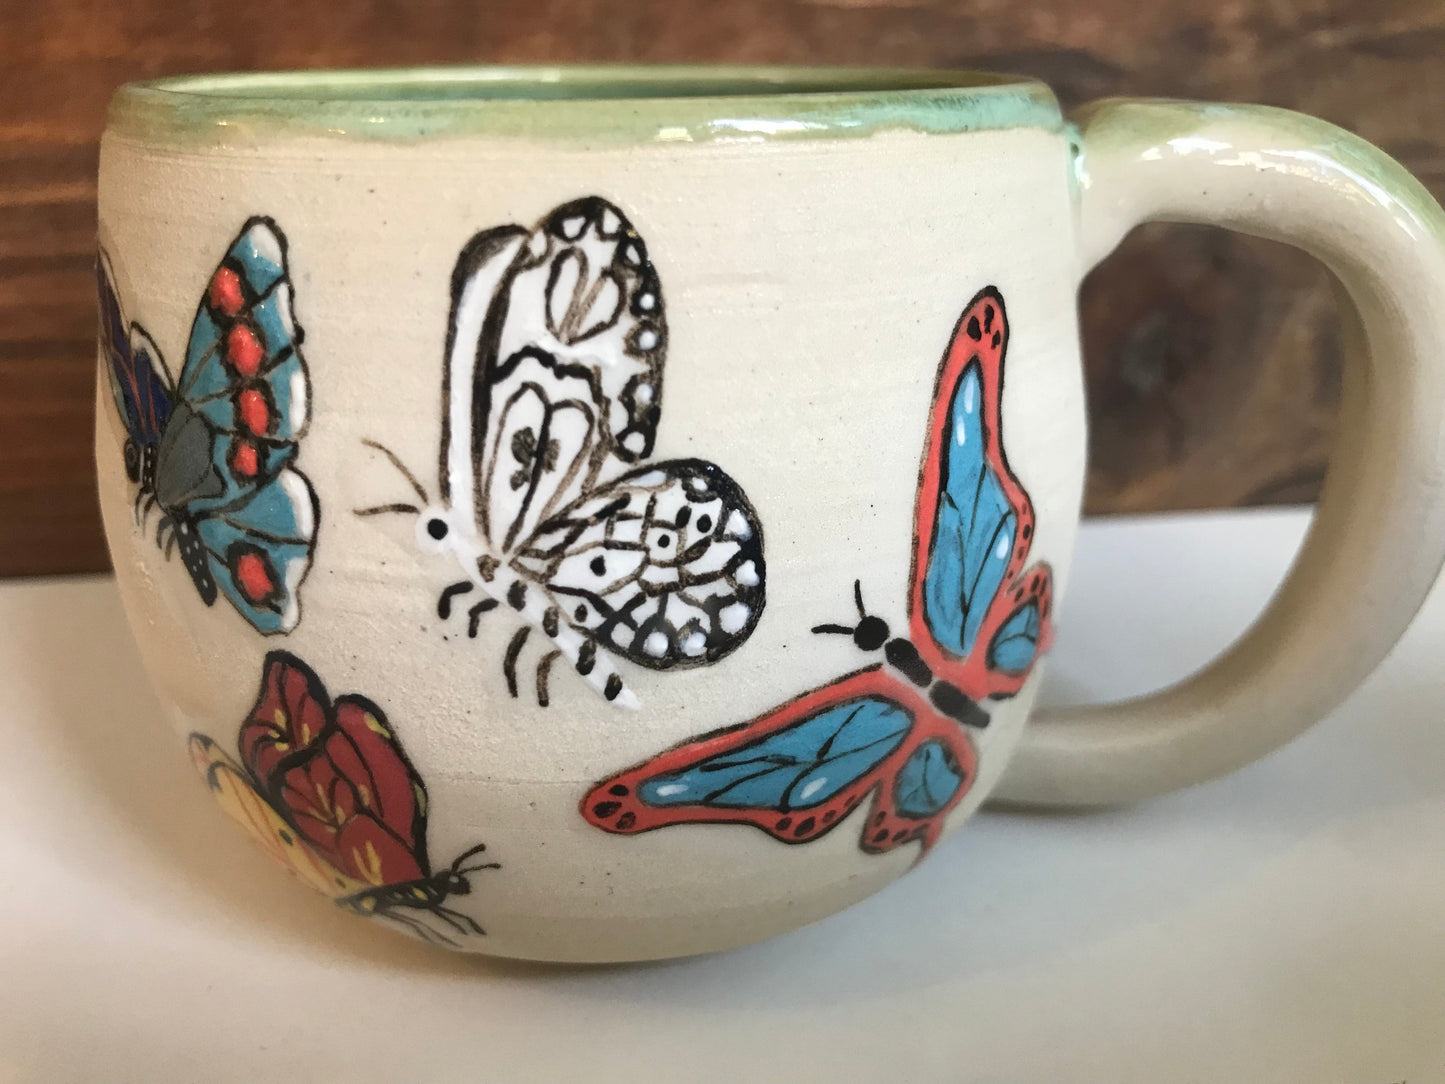 Pollinator mugs